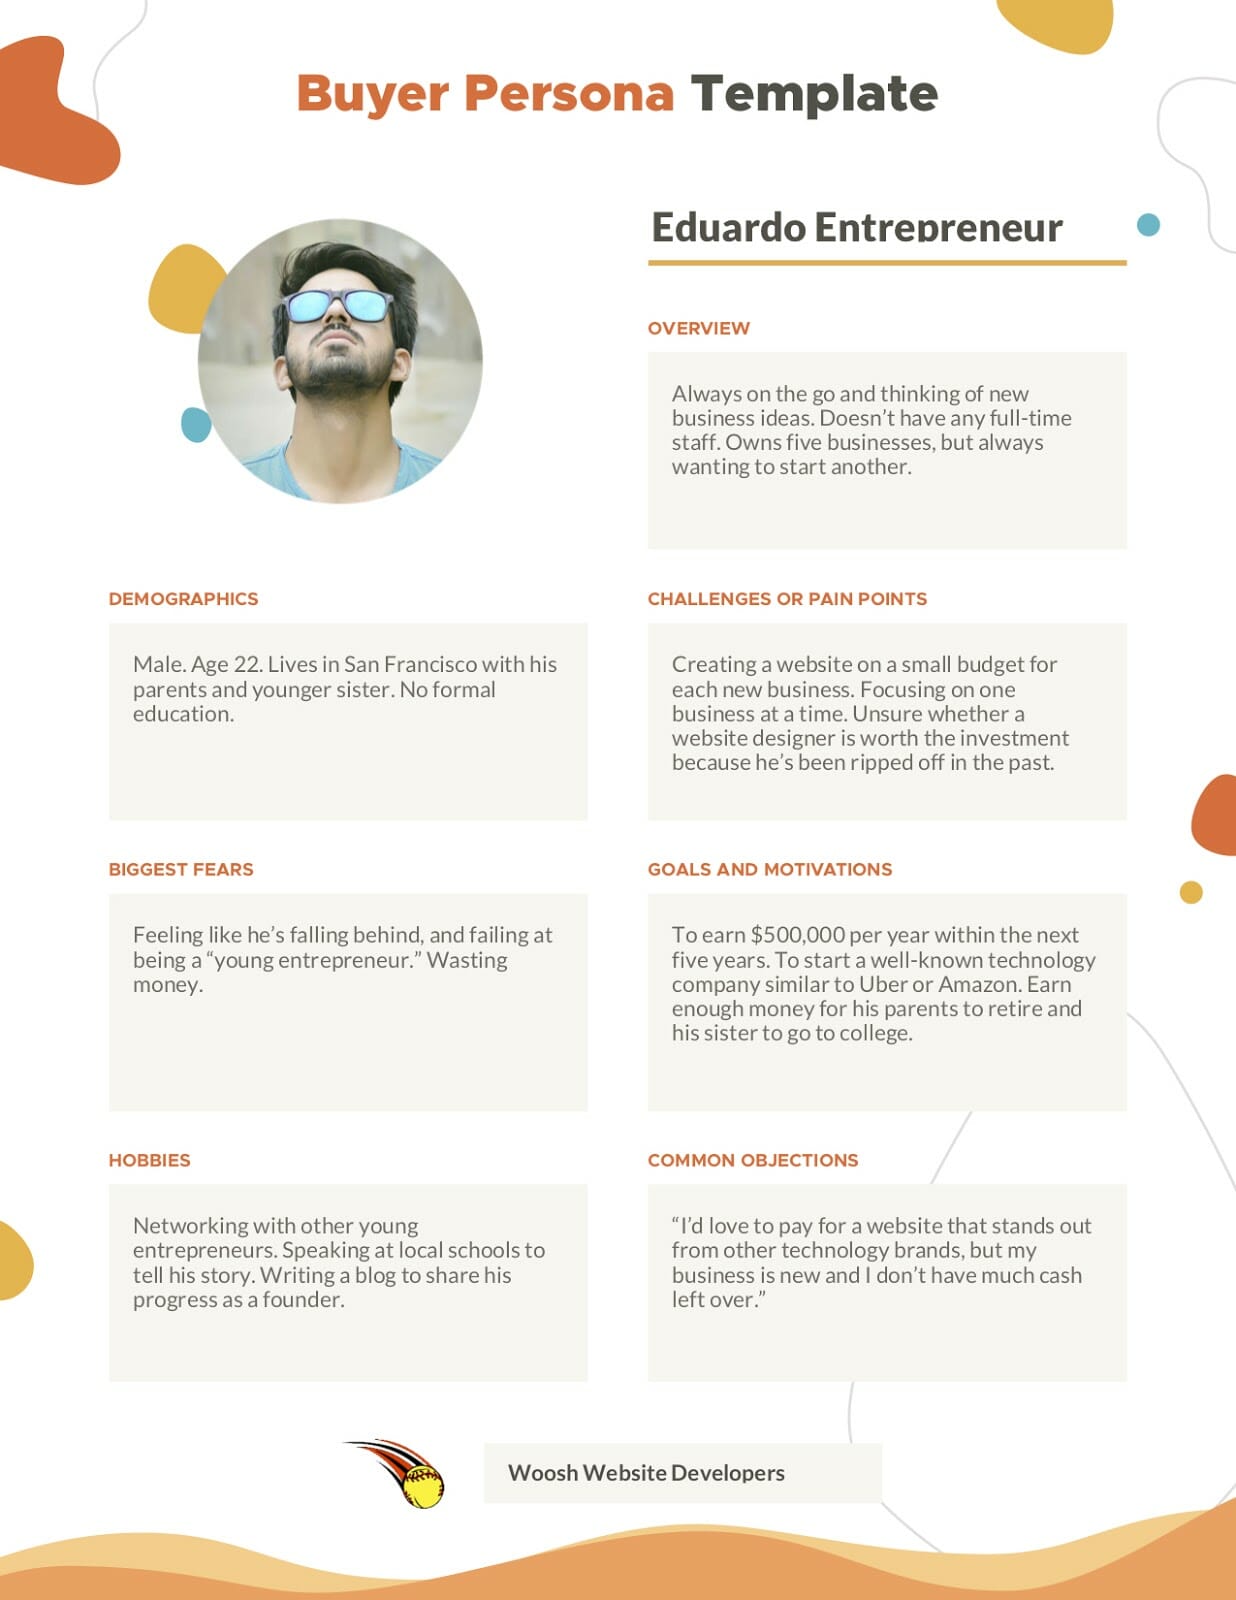 Buyer Persona Eduardo Entrepreneur